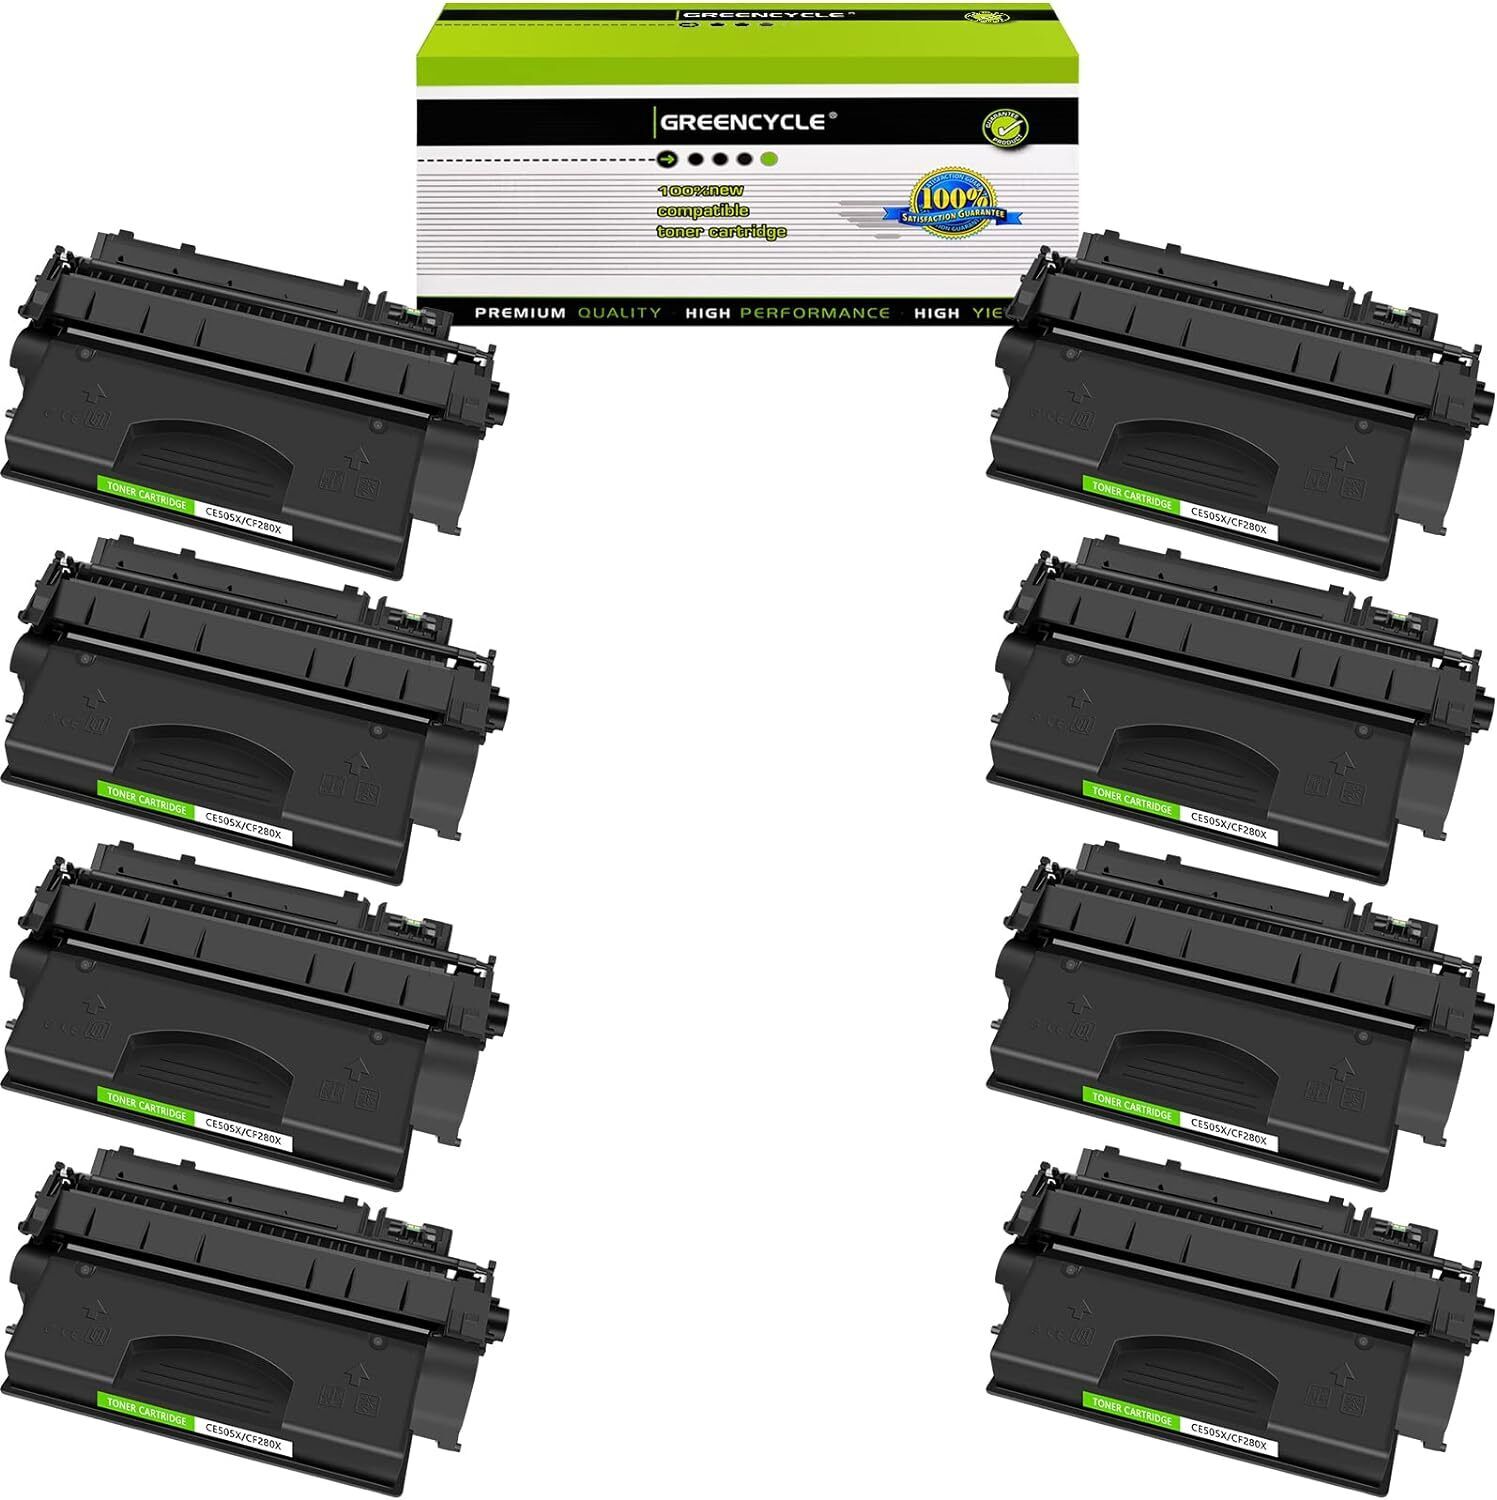 8PK CF280X High Yield Black Toner Cartridge Fits For HP LaserJet Pro 400 M401dn